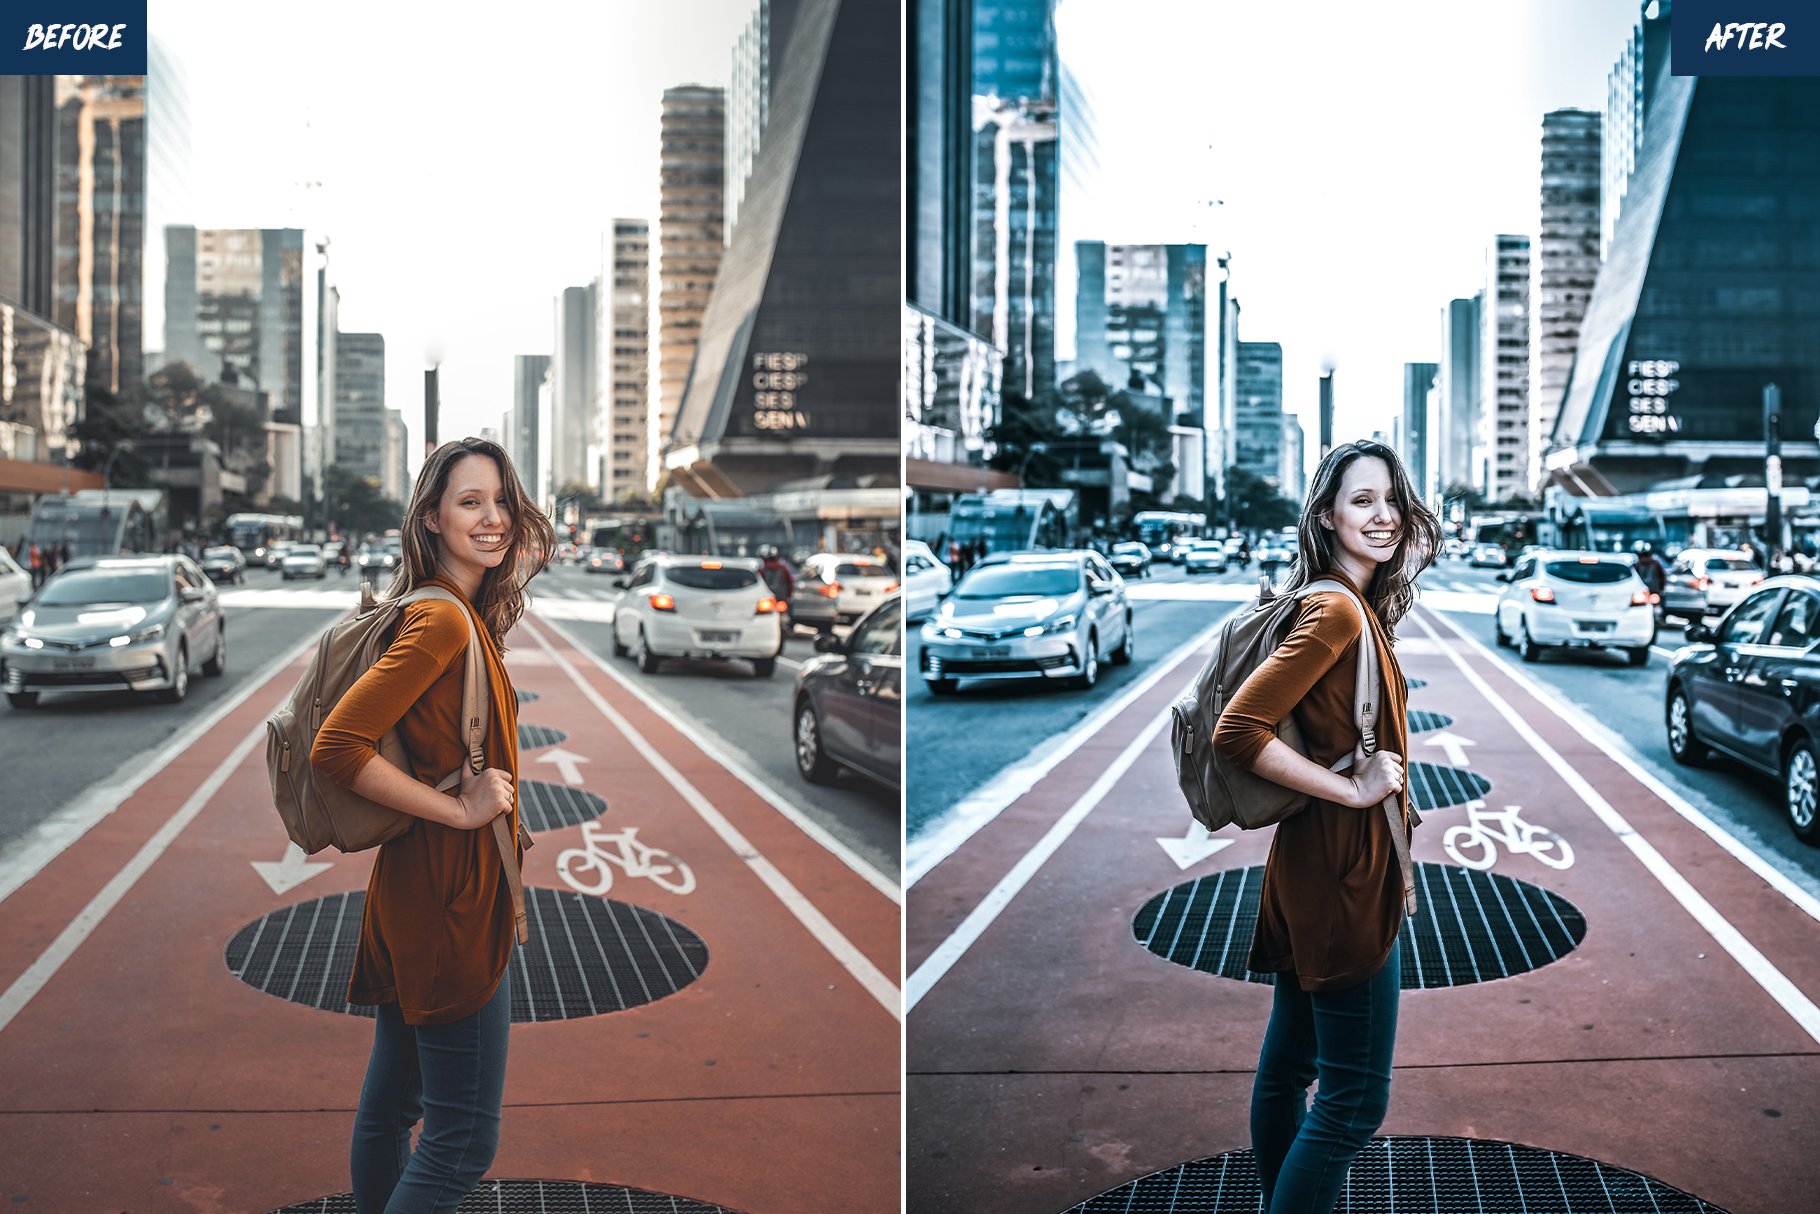 urban cinematic portrait lightroom presets for mobile and desktop before and after 09 254